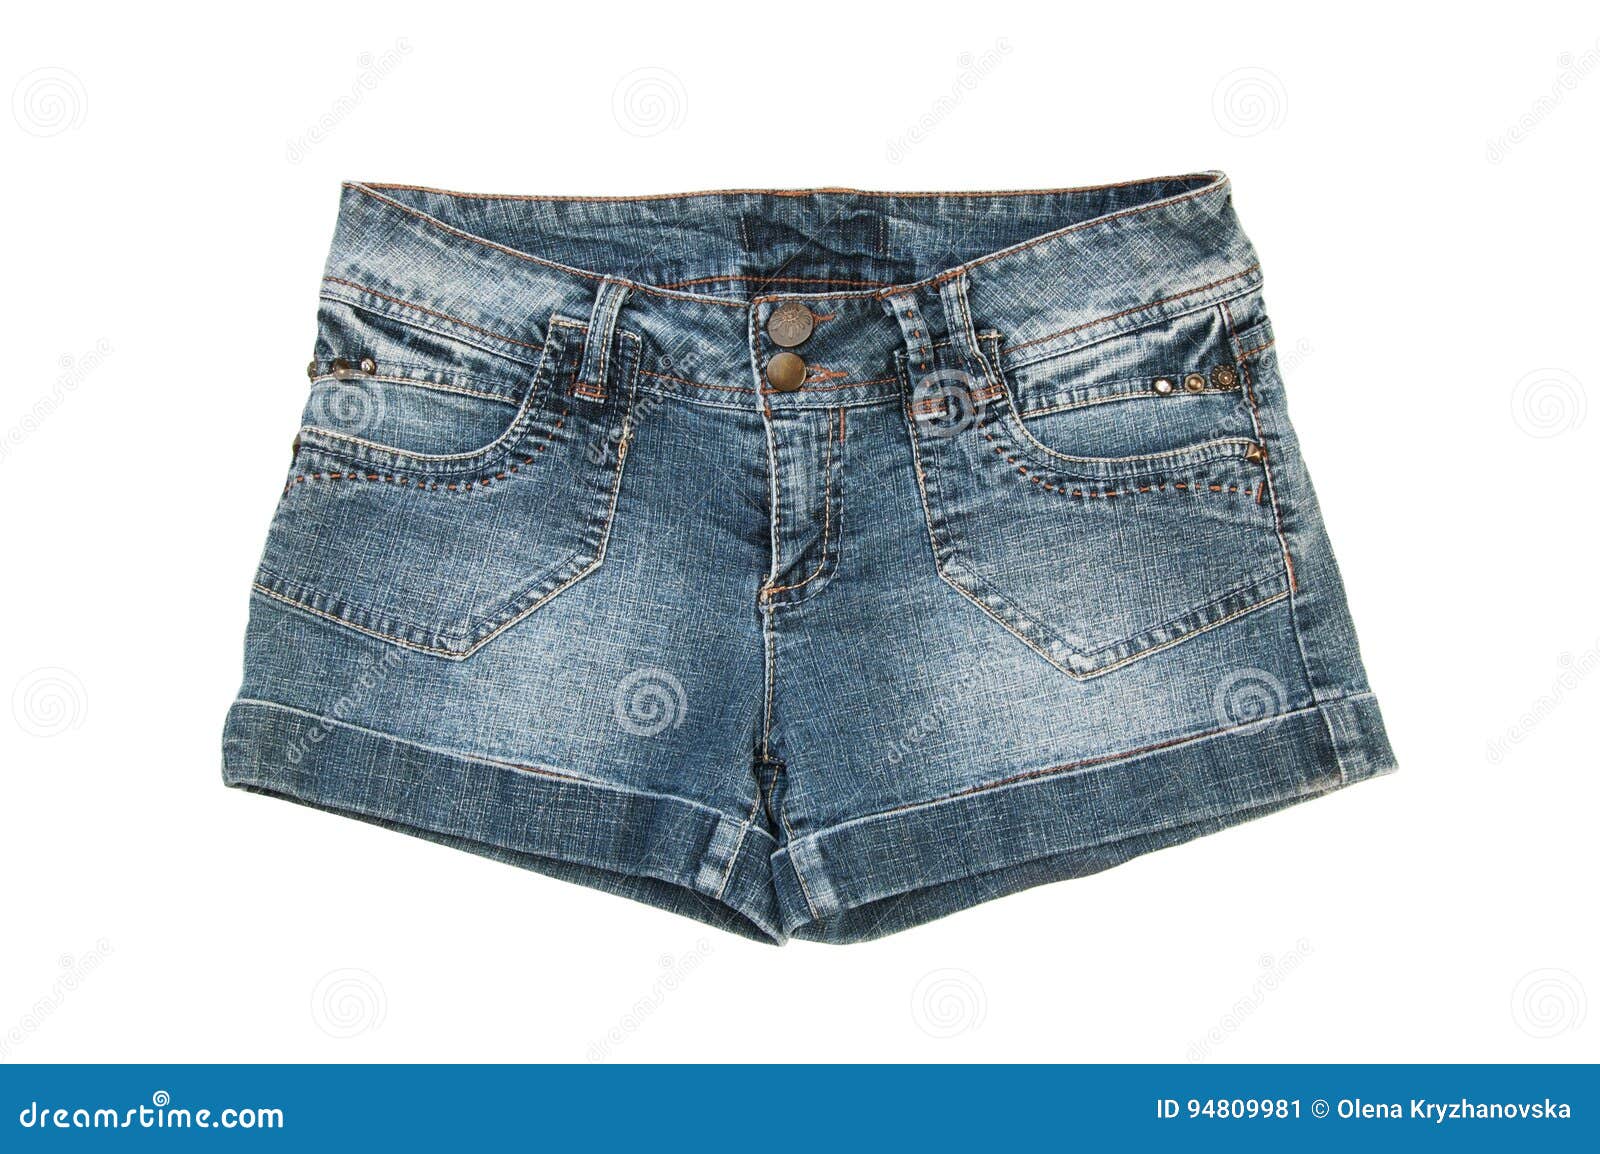 Jeans Shorts Isolated on White Stock Image - Image of stitch, cotton ...